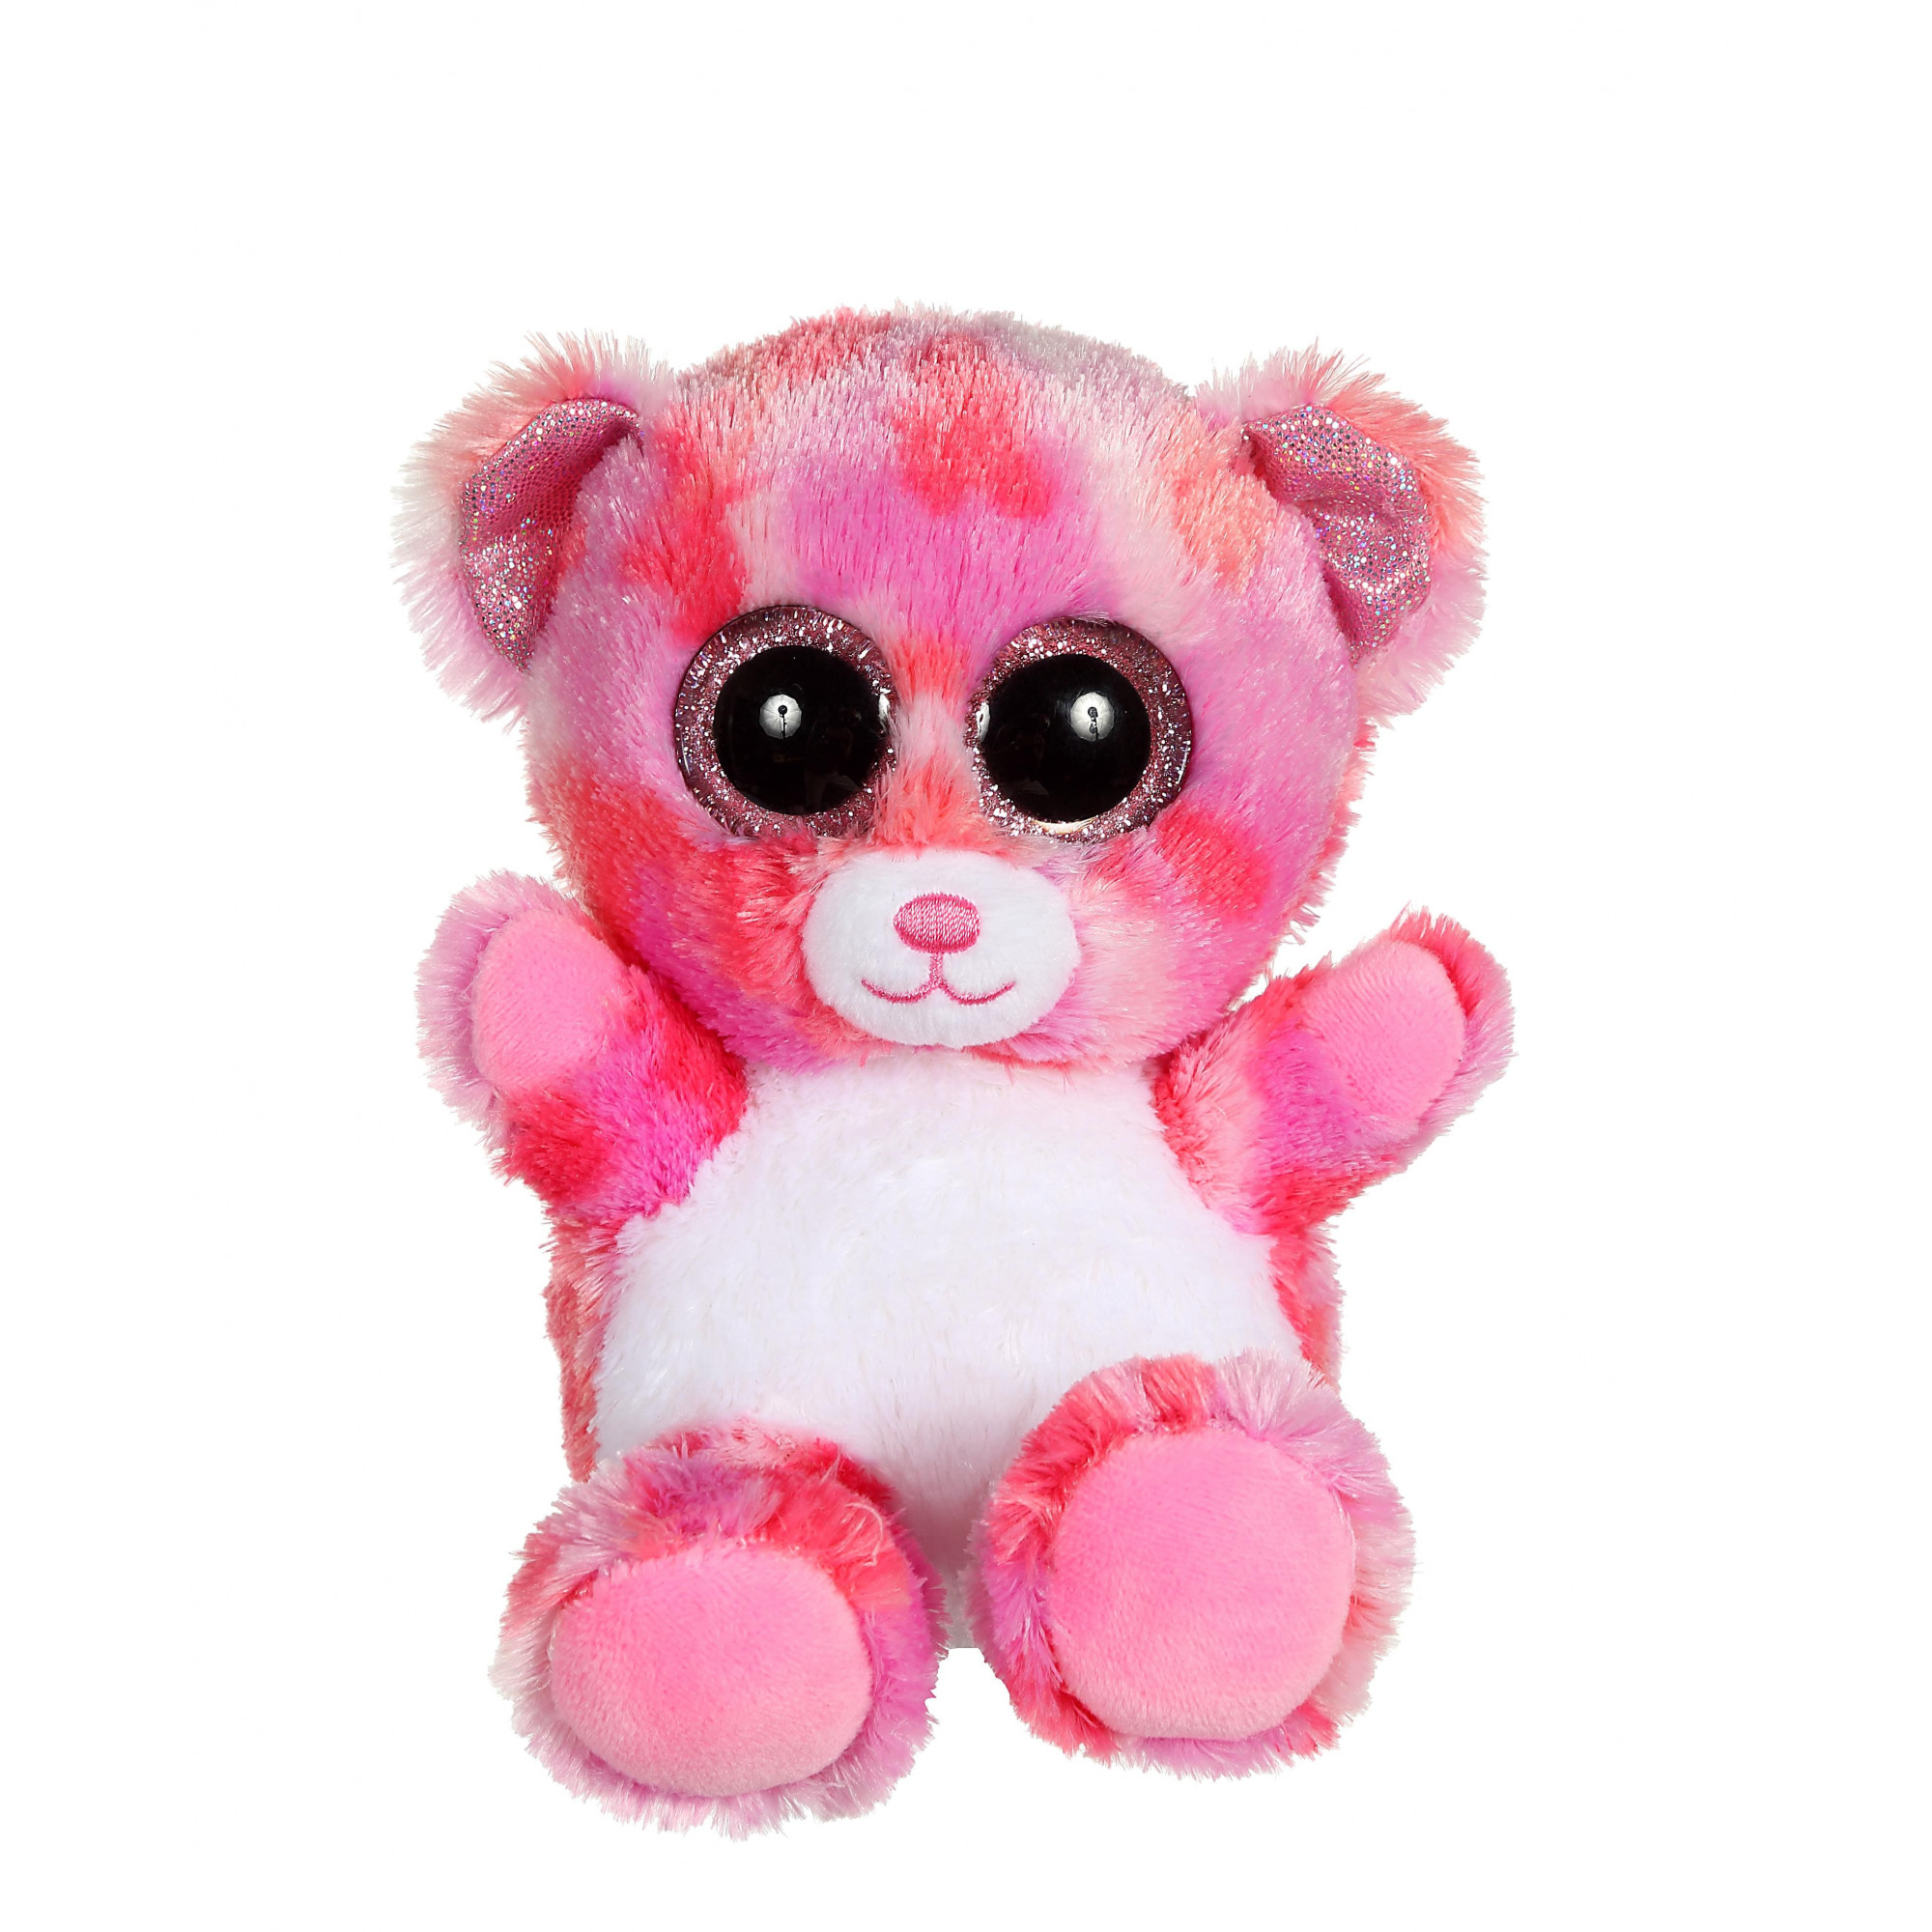 Hoopy - Brilloo Friends pink bear 13 cm